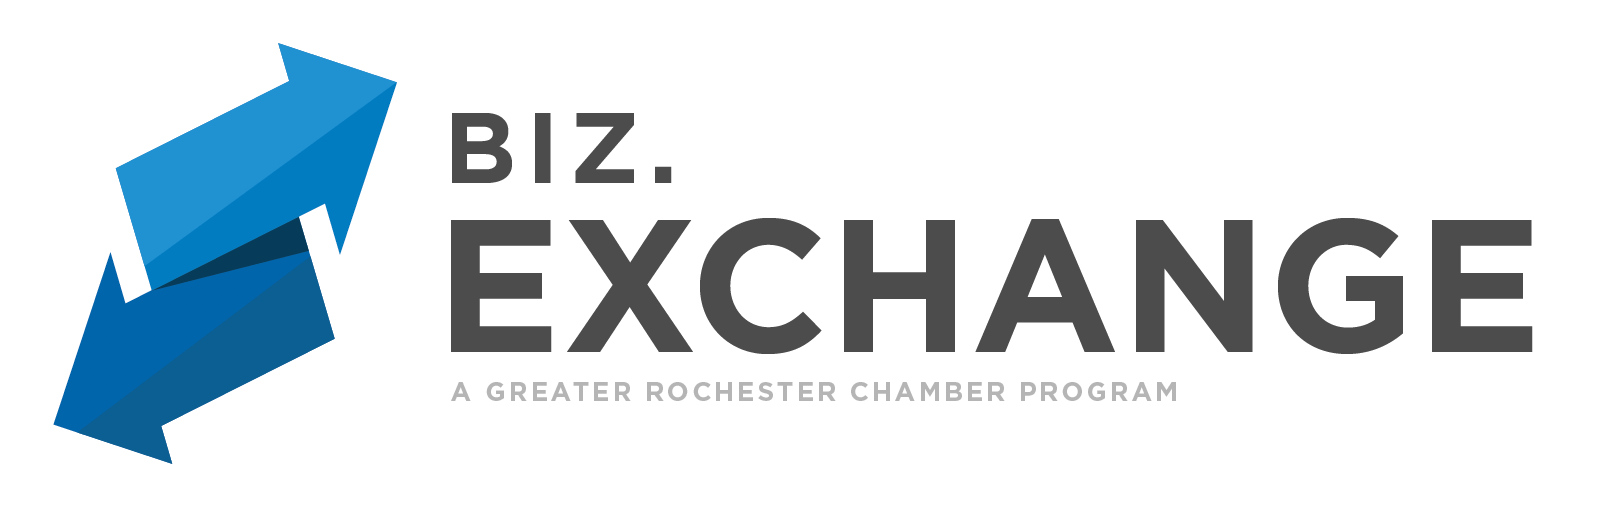 biz exchange 2021 logo